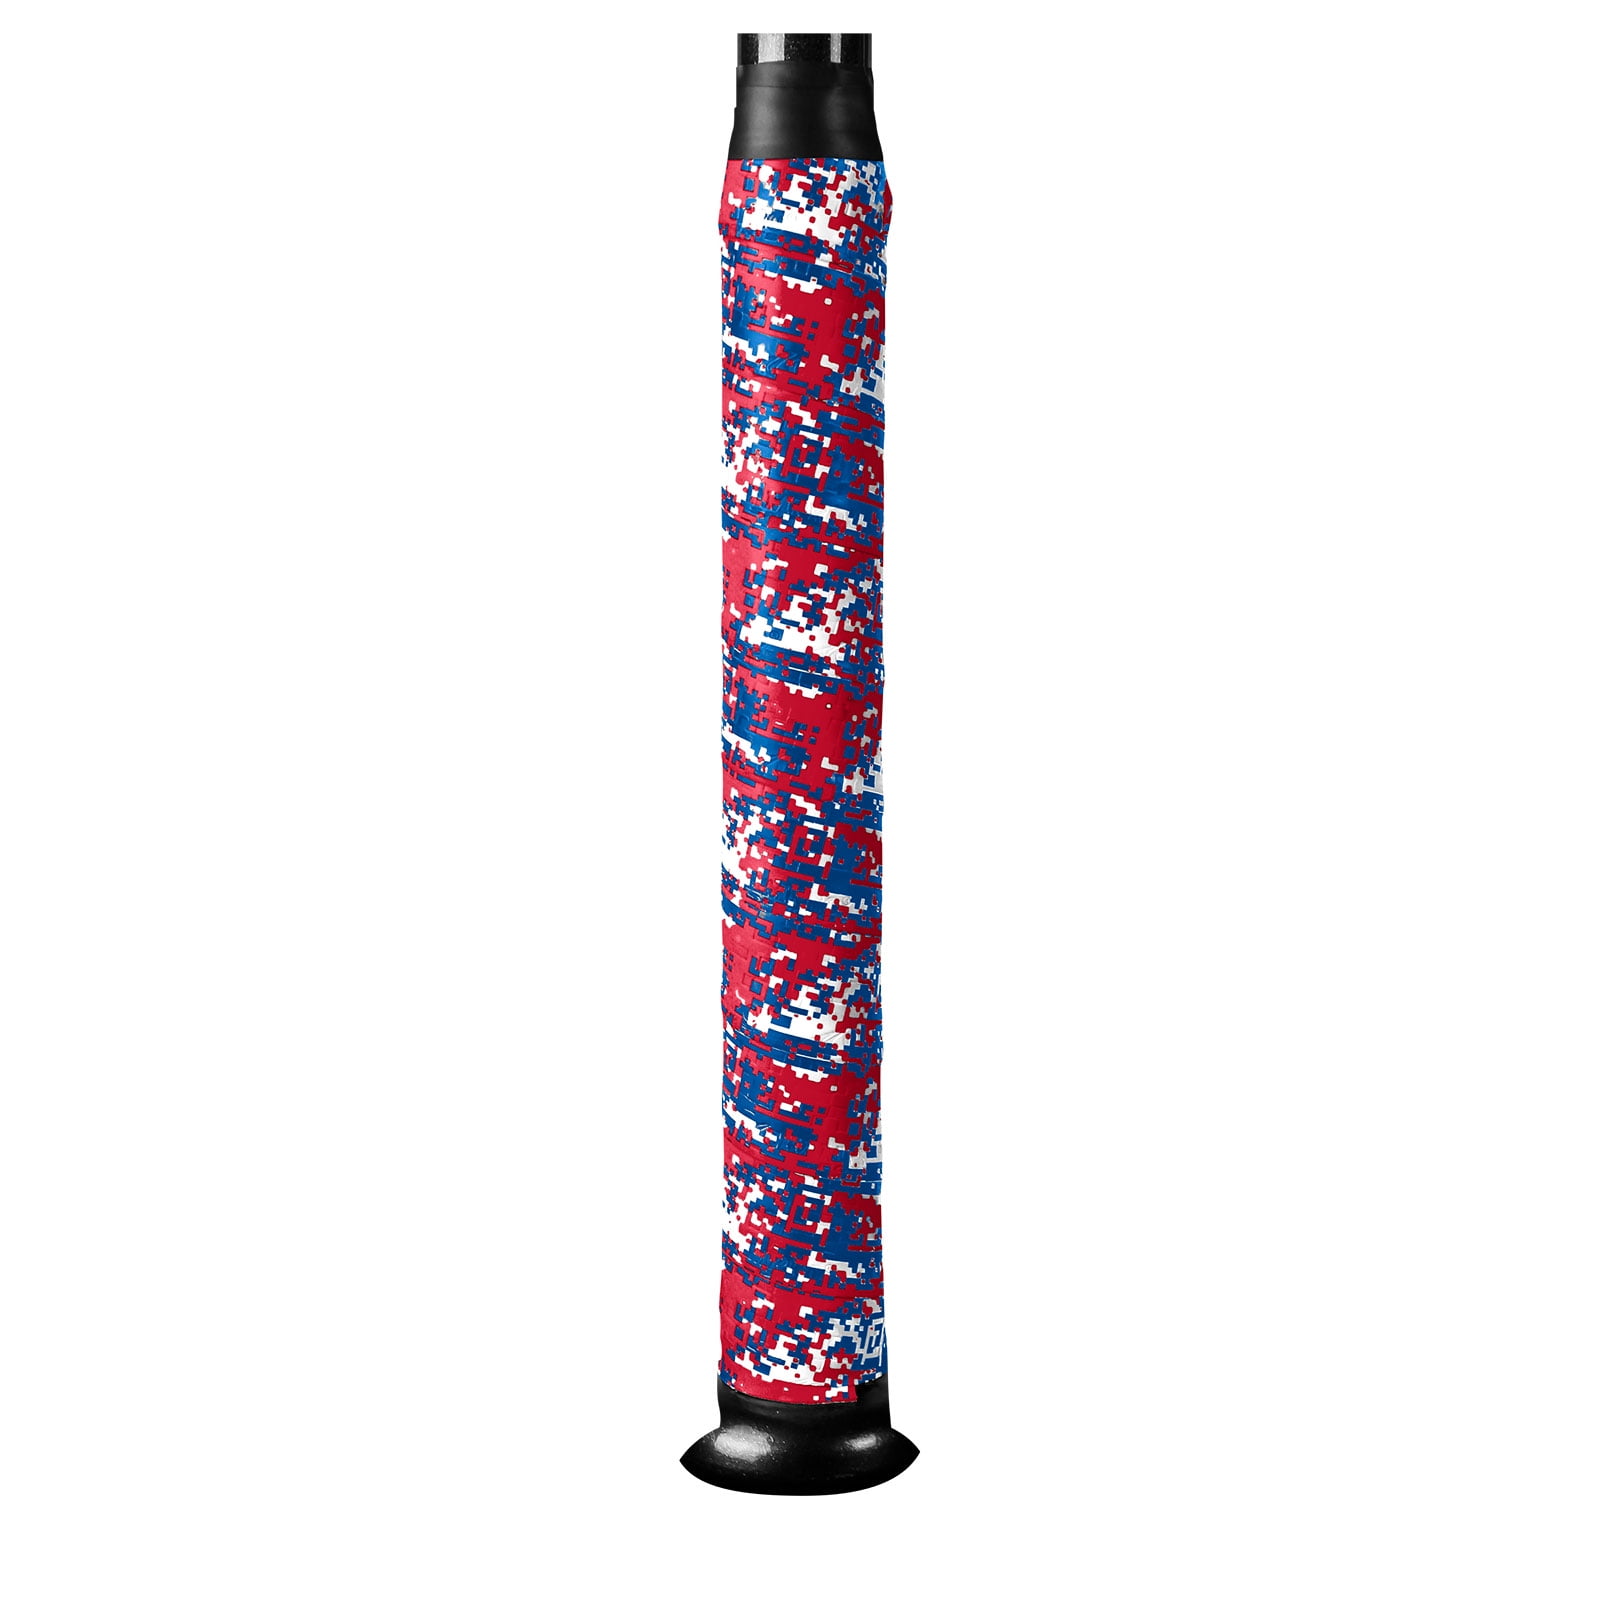 New Champro Sports A031 Xtreme Tack Bat Grip 1.8mm x 39" Red,White,& Blue Camo 